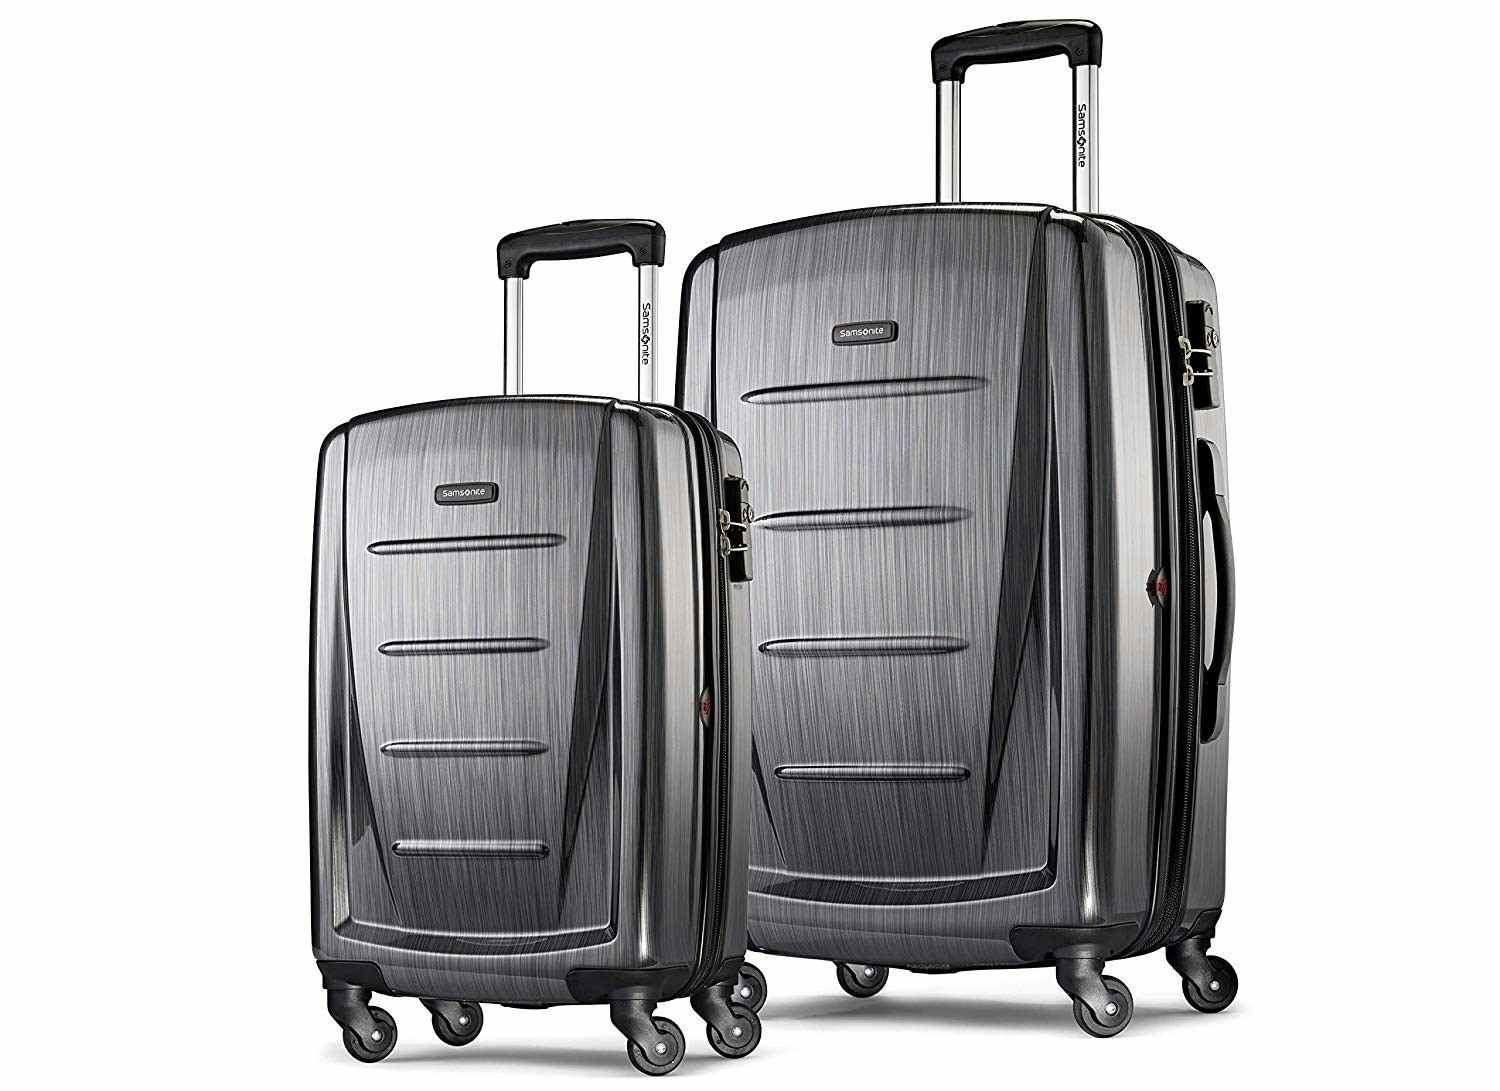 Samsonite Winfield 2 Expandable Hardside 2-Piece Luggage Set